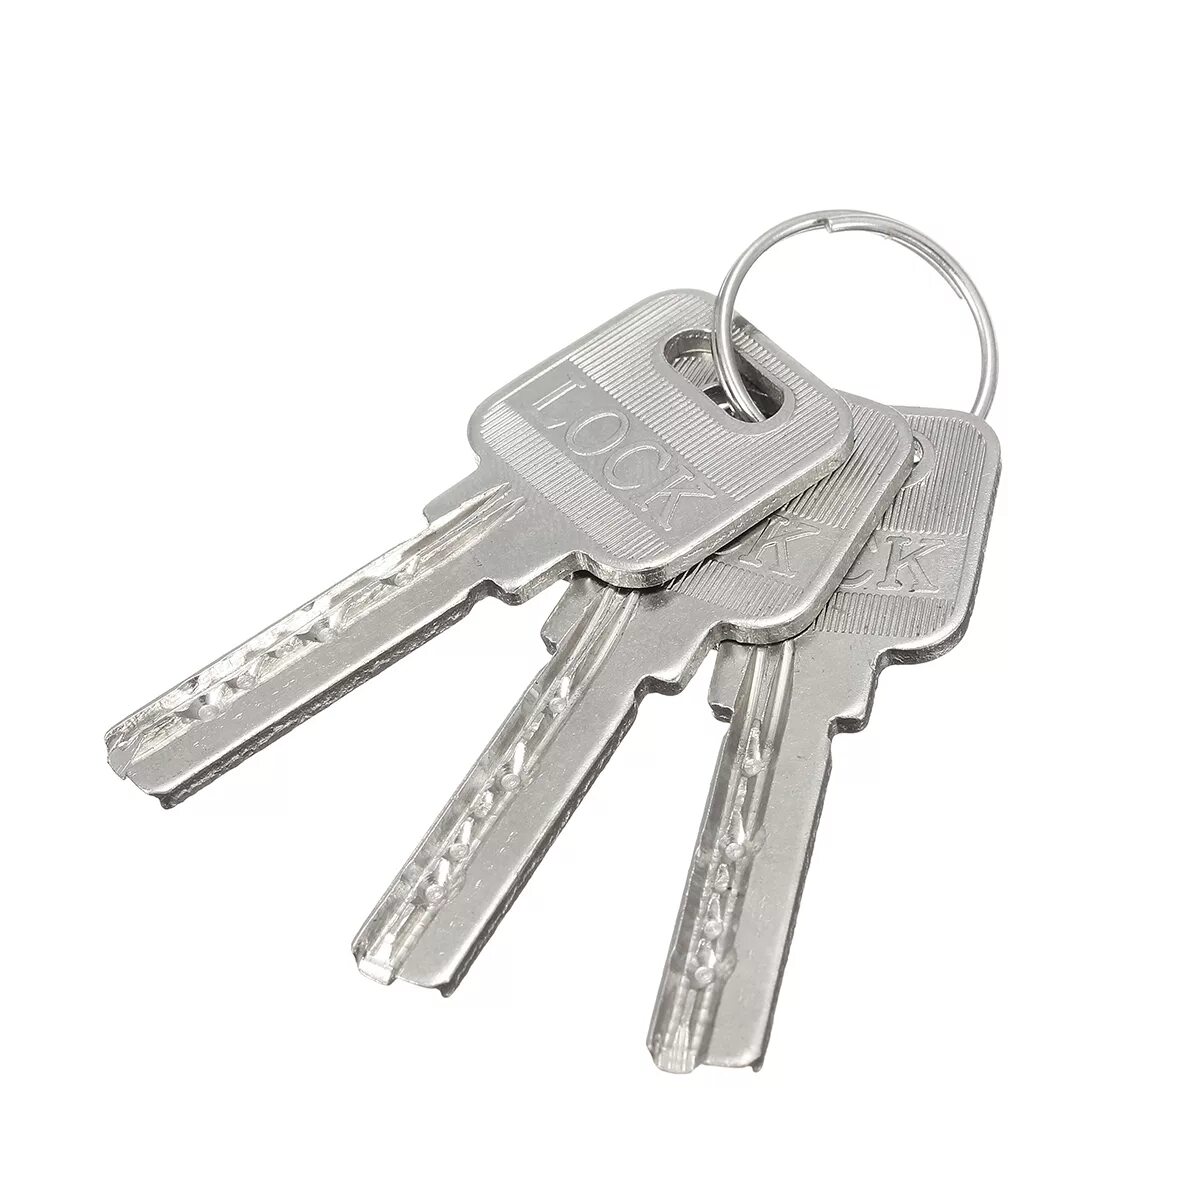 Ключ ul-4 замок дверной. Ключ 21417 для замка. Ключи и замки Doorlock. Ключи для замков (- \ для замка Shanghai Lianjiang Electric ms739-1).